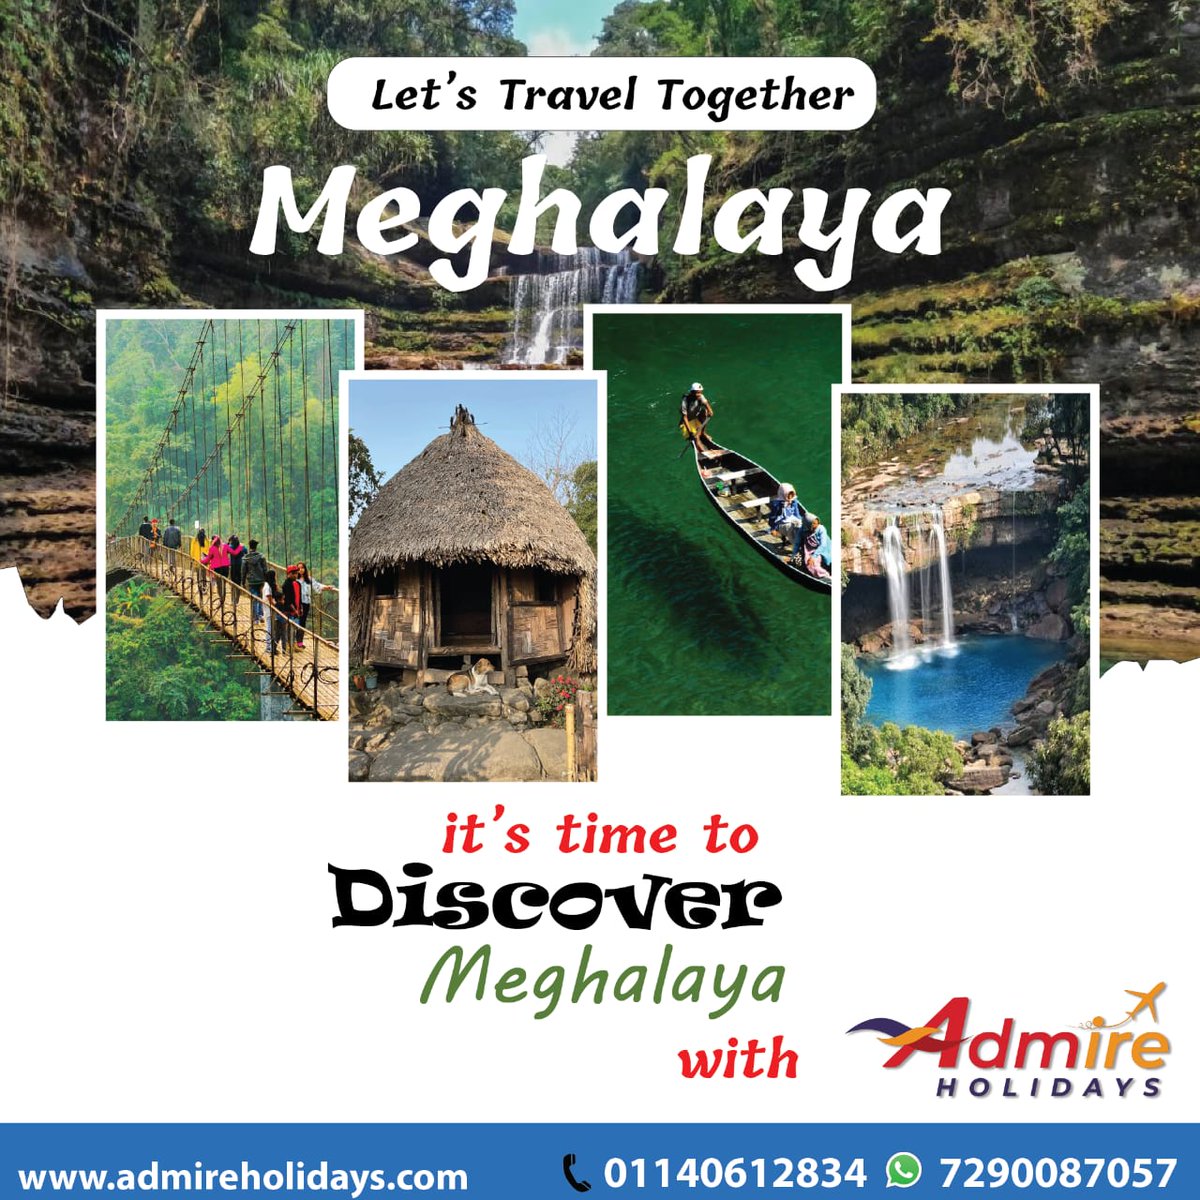 It's time to discover Meghalaya with Admire Holidays...
#Meghalaya #adventuretime #fun #traveling #admireholidays